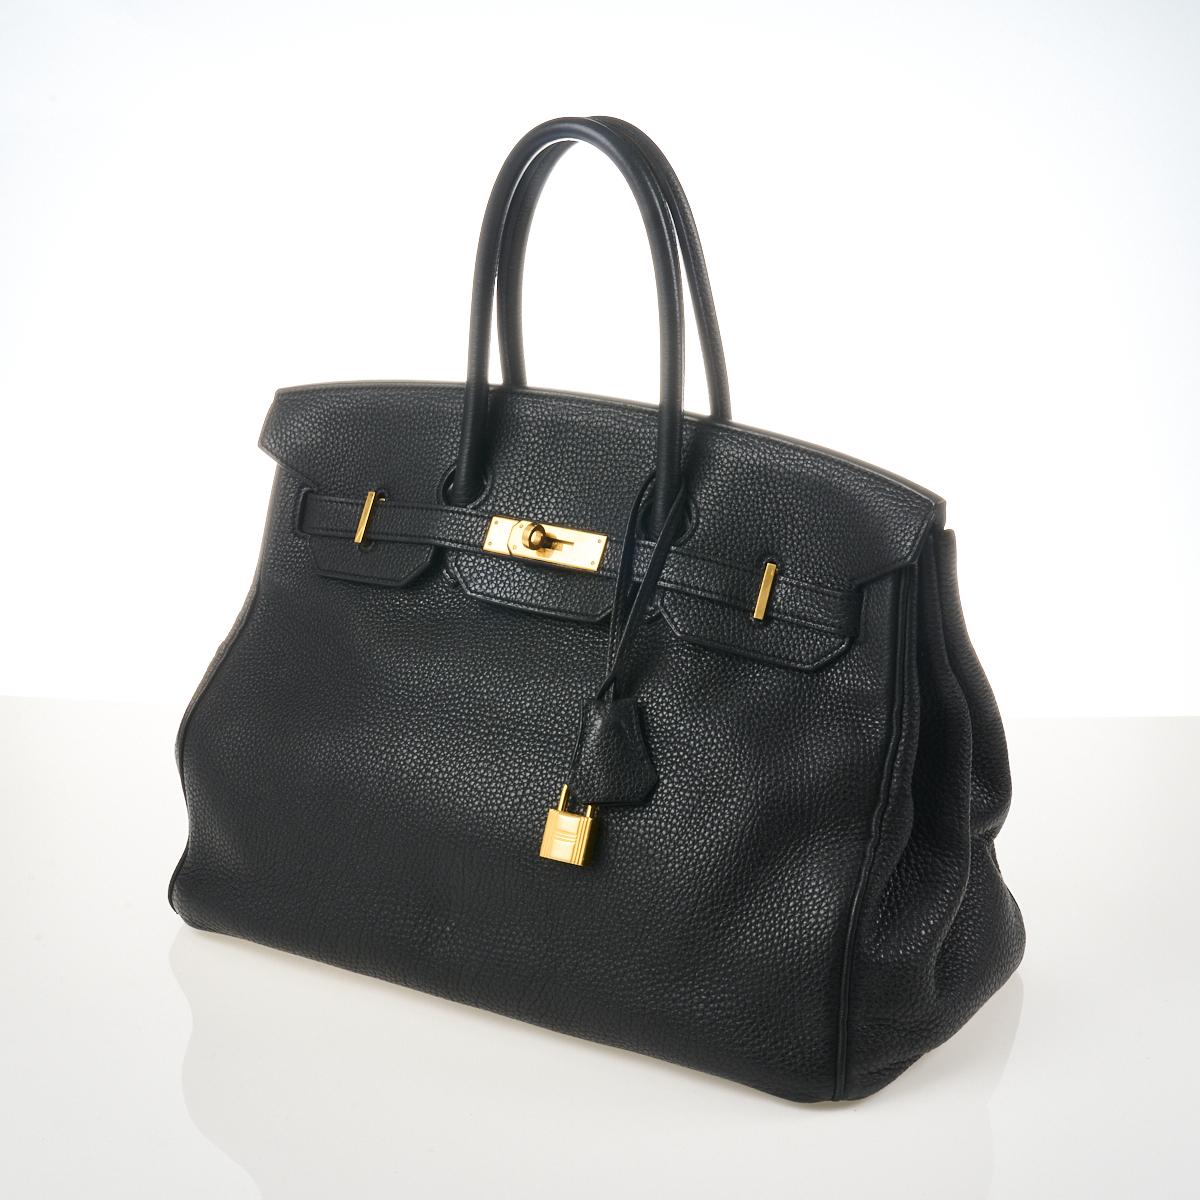 HERMES PARIS, Handbag model BIRKIN 35 cm in black Togo leather - Auctions  Luxembourg